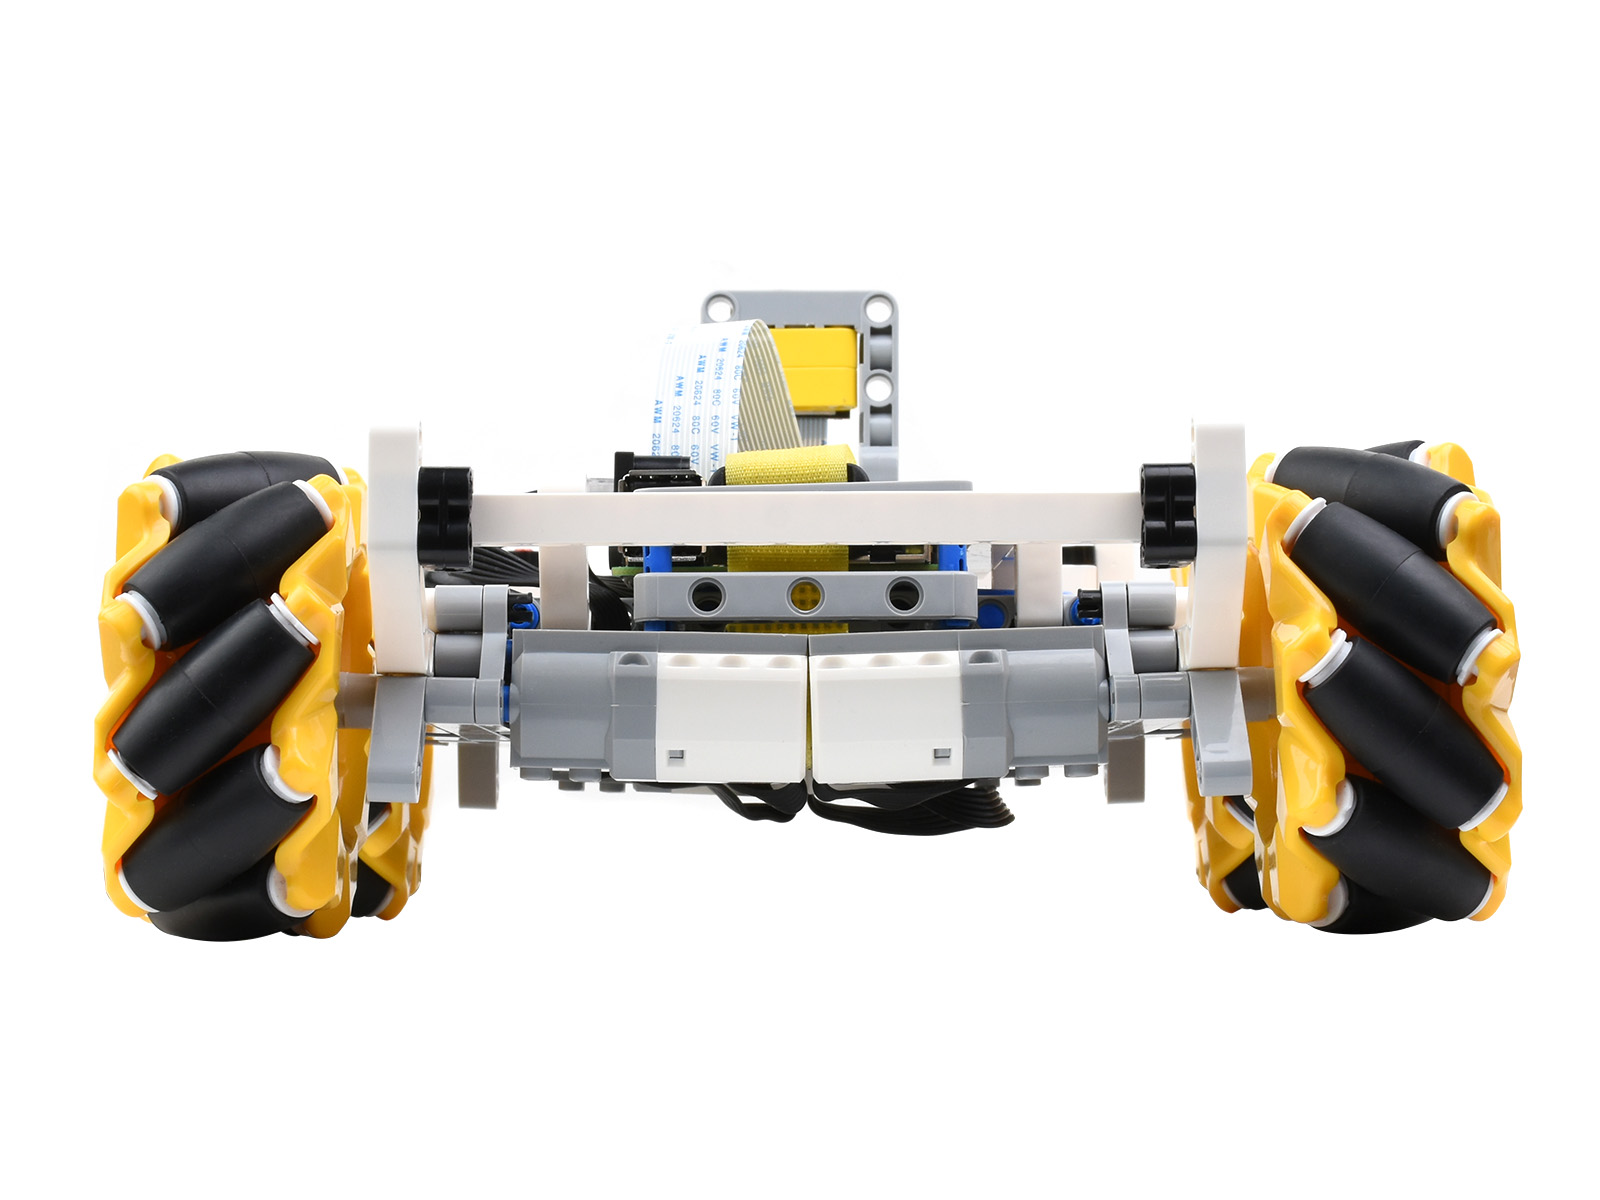 Adeept 4WD Omni-Directional Mecanum Wheels Robotic Car Kit for ESP32-S3